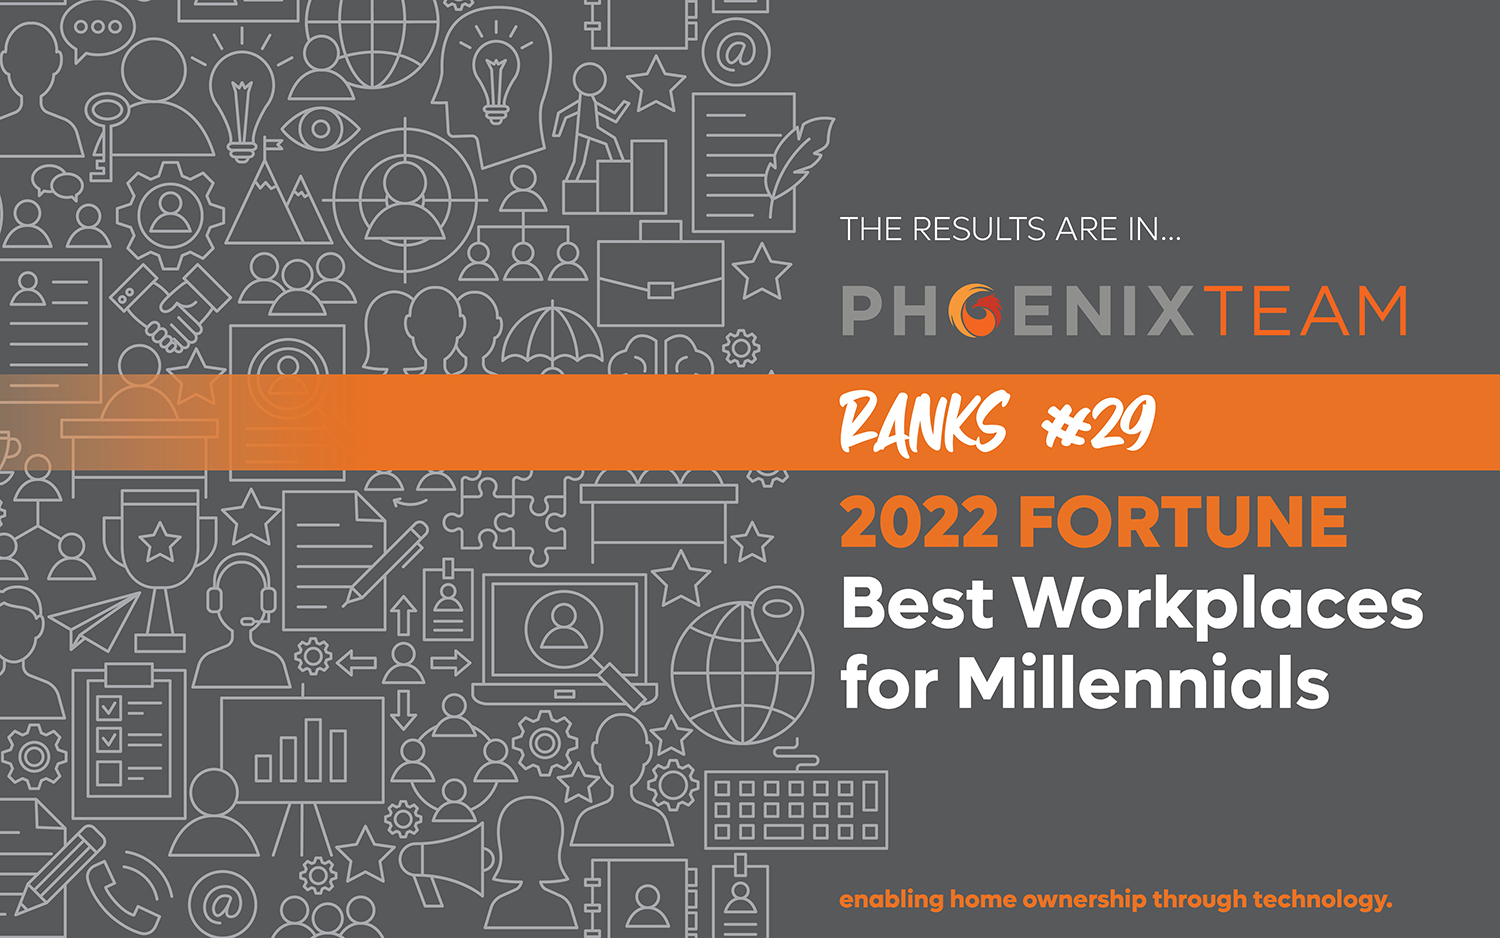 PhoenixTeam Best Workplaces for Millennials